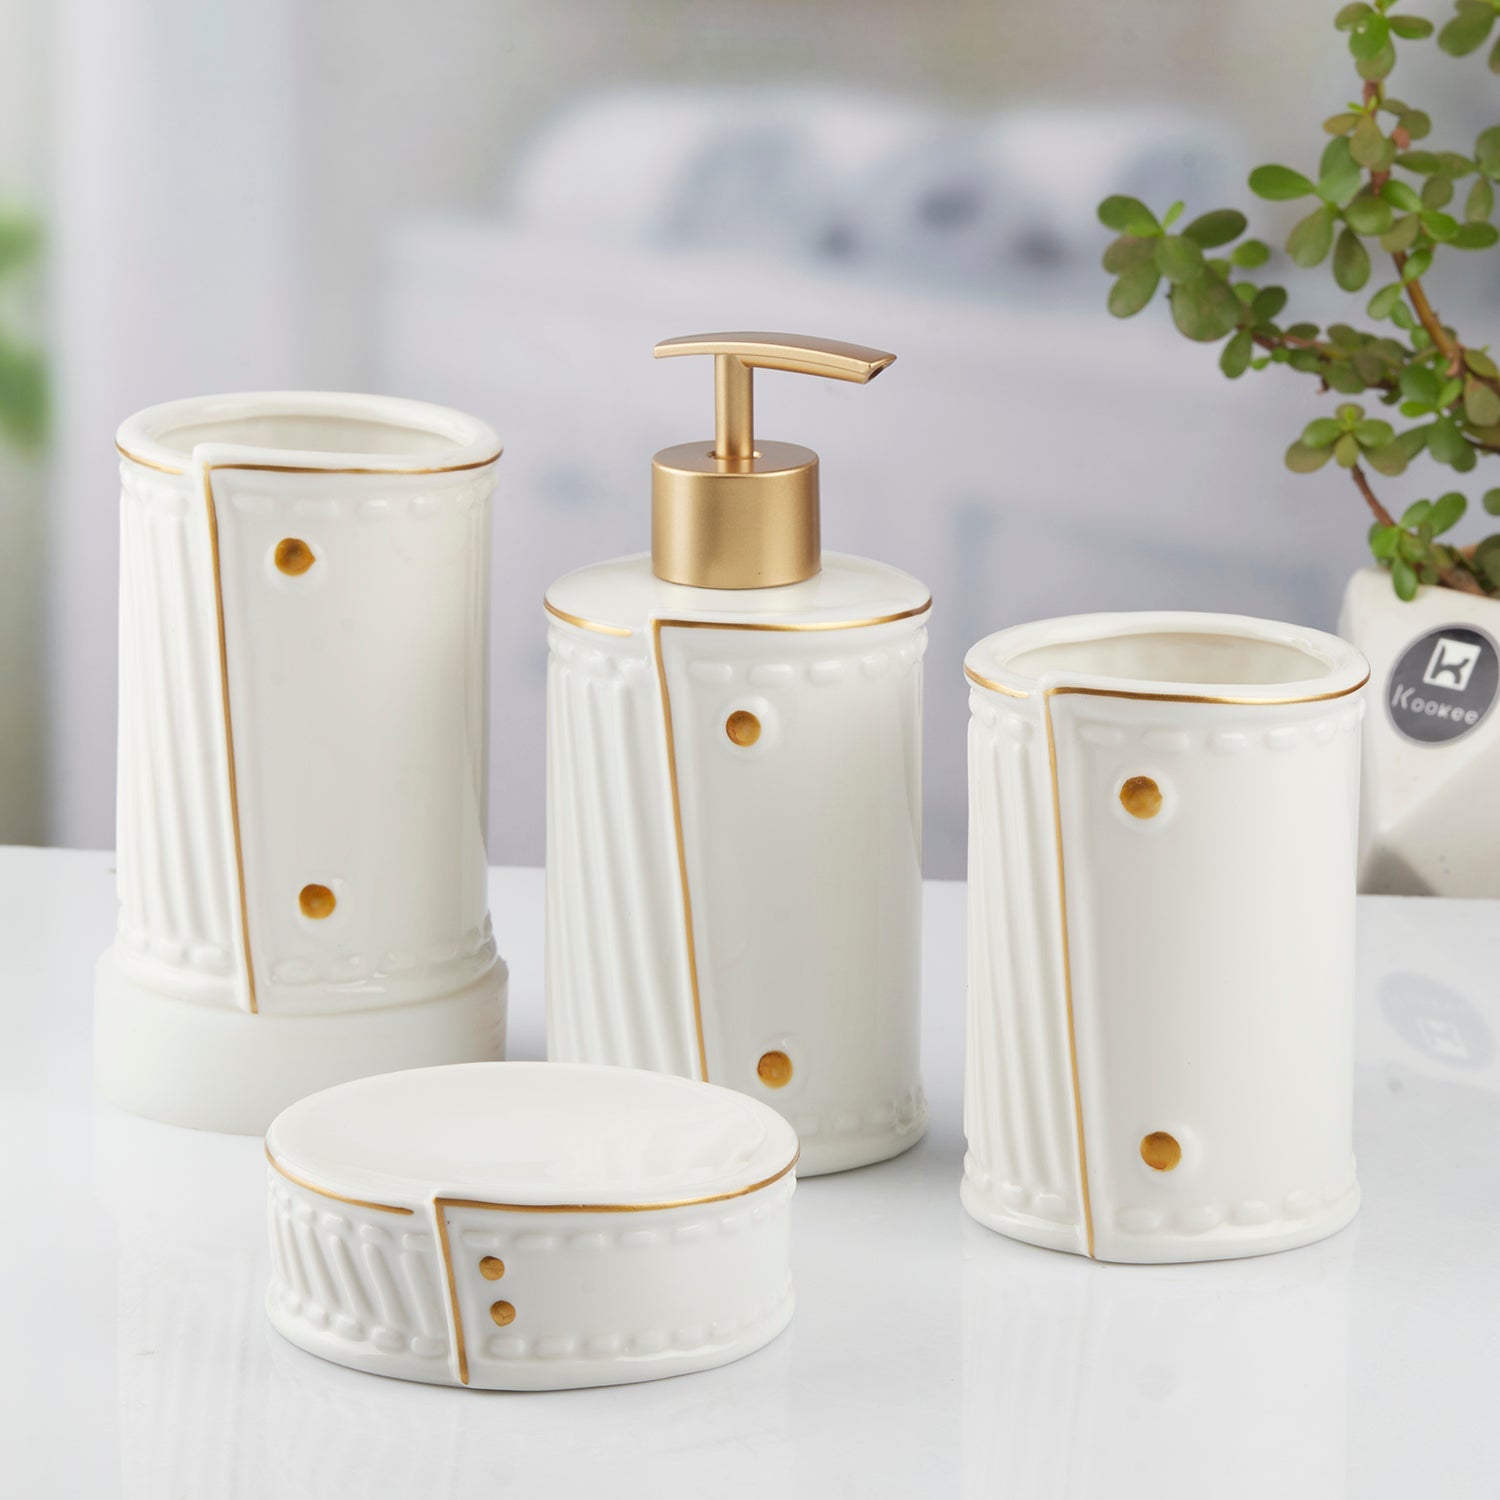 Ceramic Bathroom Set of 4 with Soap Dispenser (10373)